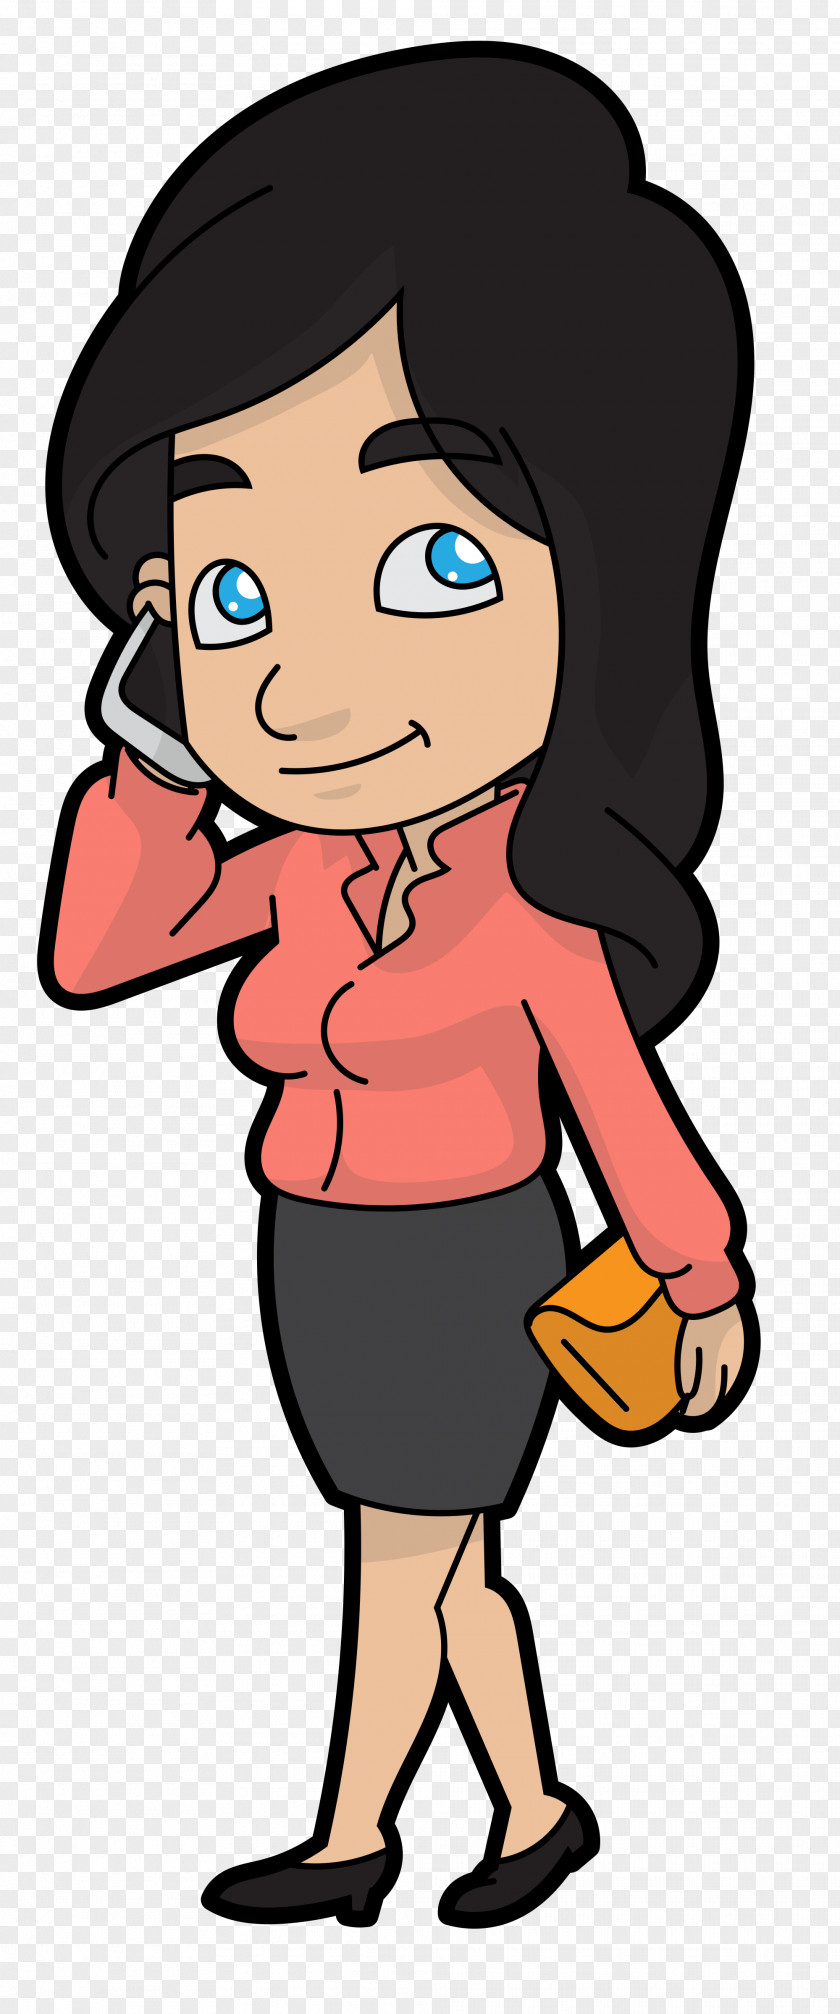 Businesswomen Cartoon Clip Art Mobile Phones Image Illustration PNG